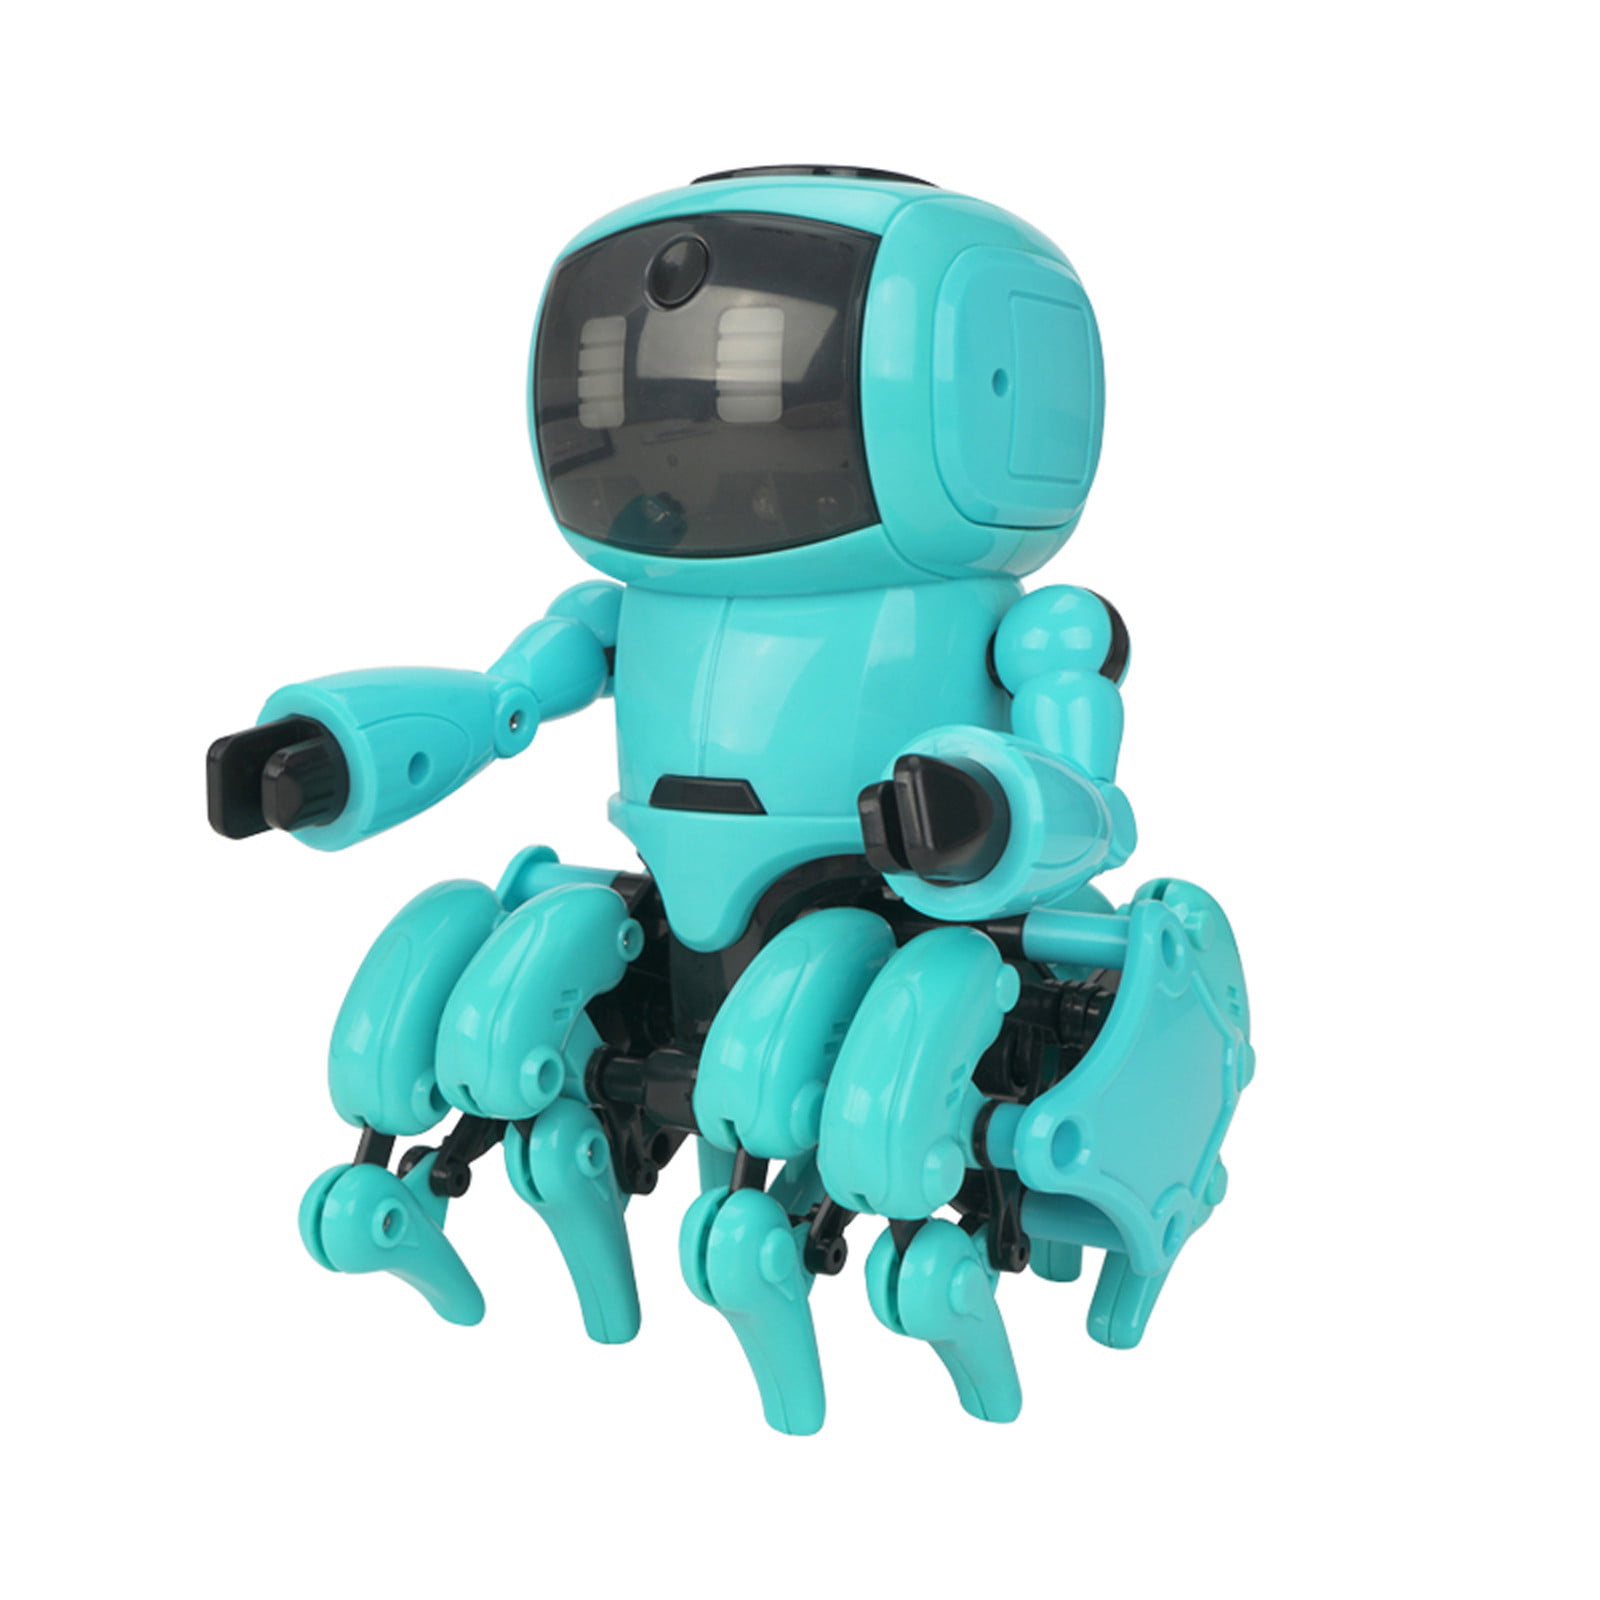 Sings, Hi-Tech Wireless Remote Control Robot Kids RC Robot Toy Senses Gesture 